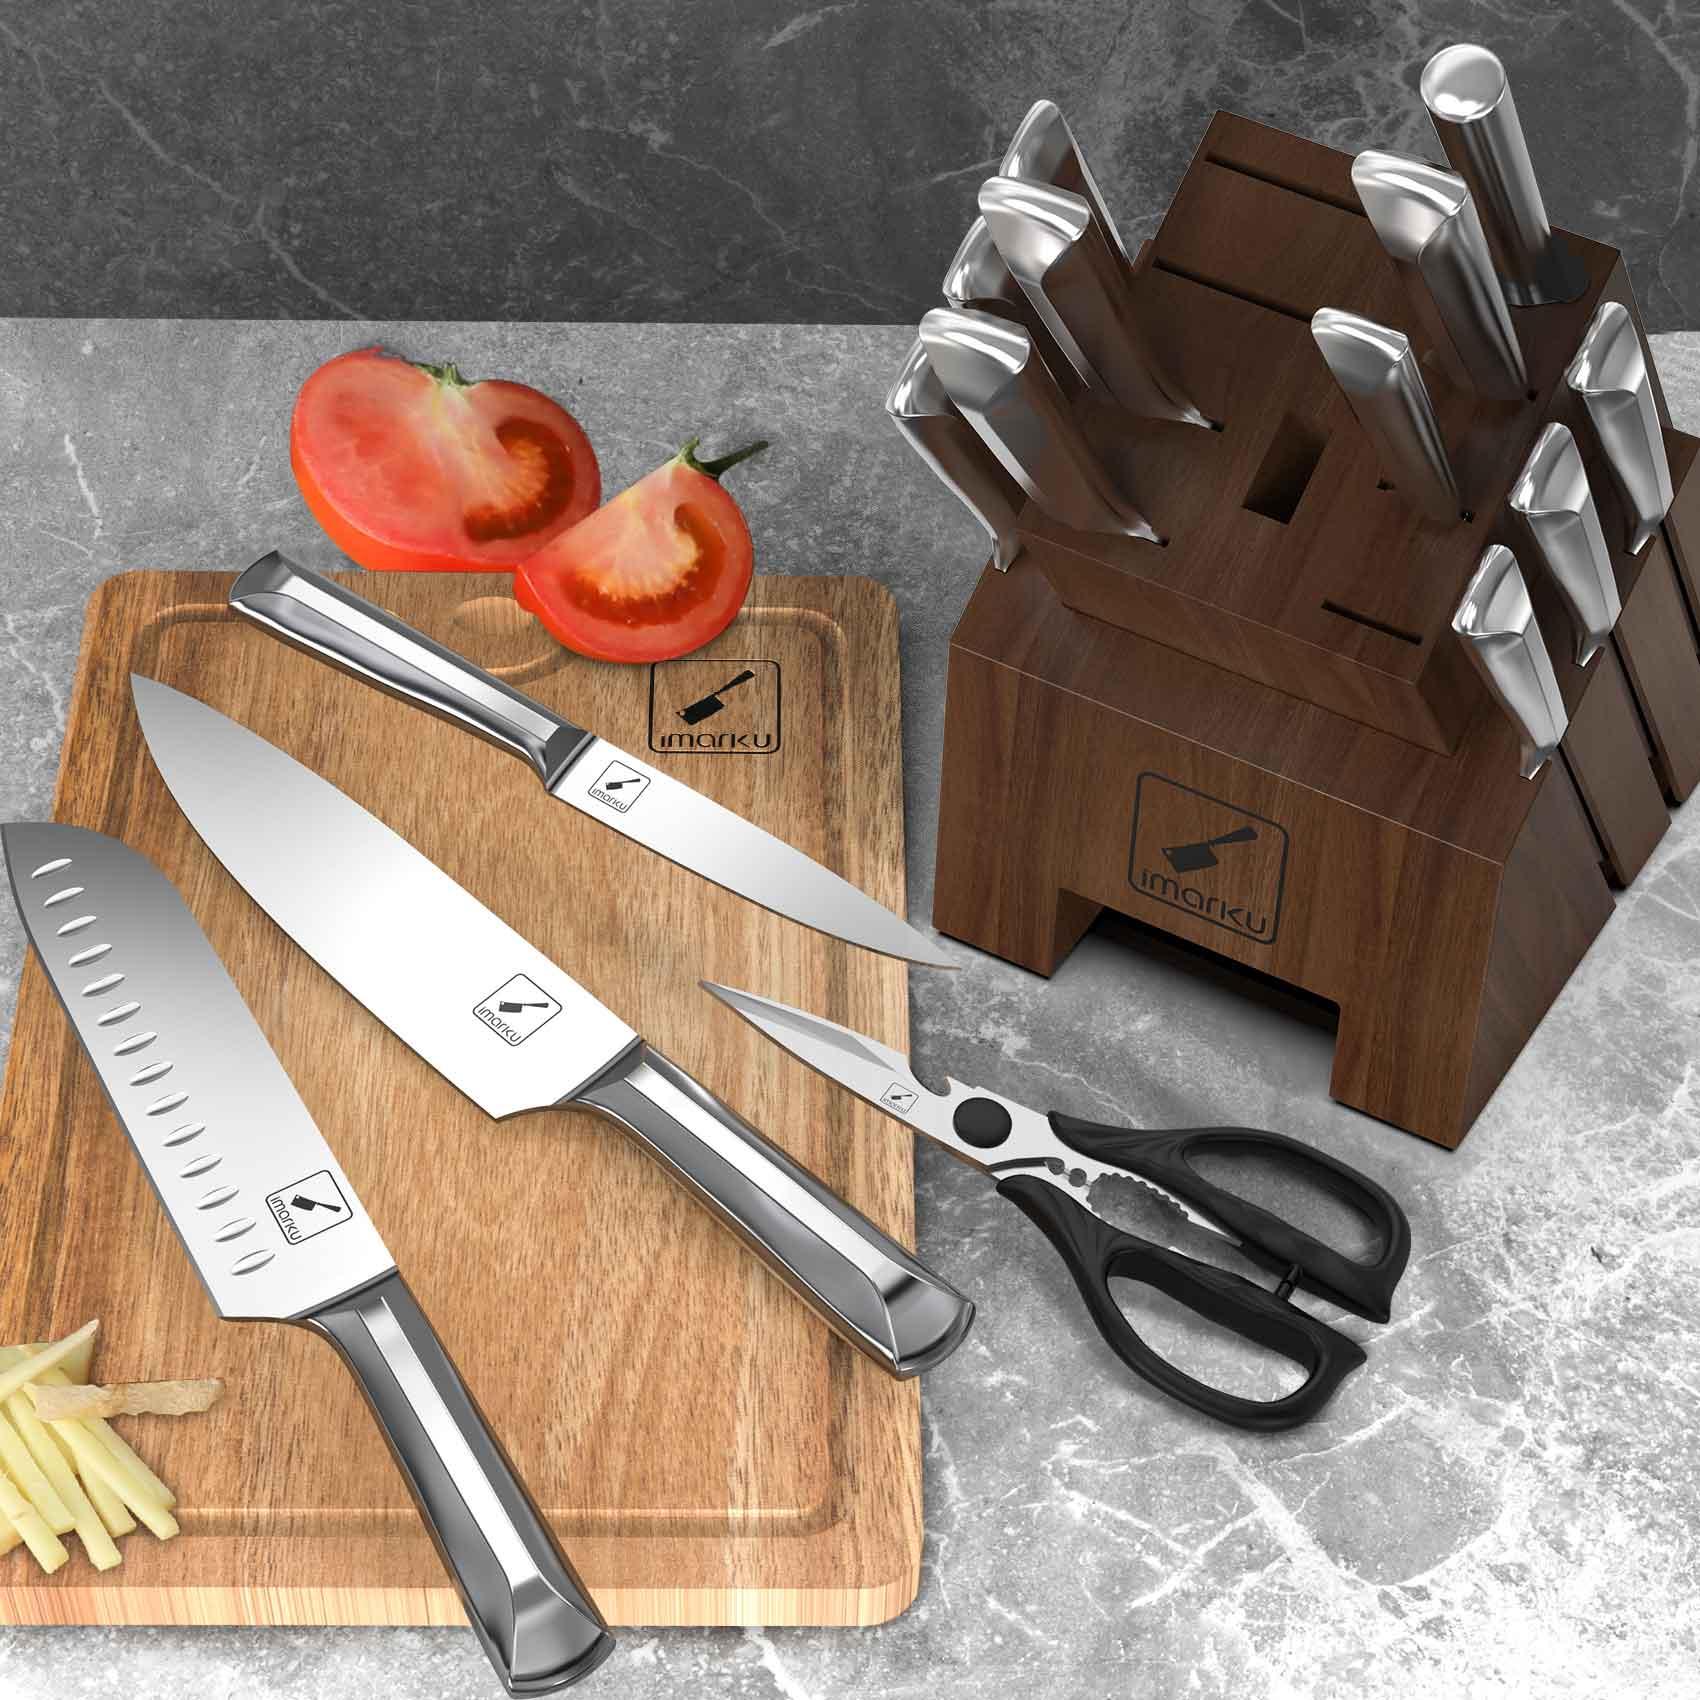  imarku 16-Piece Knife Set with Block, Kitchen Knife